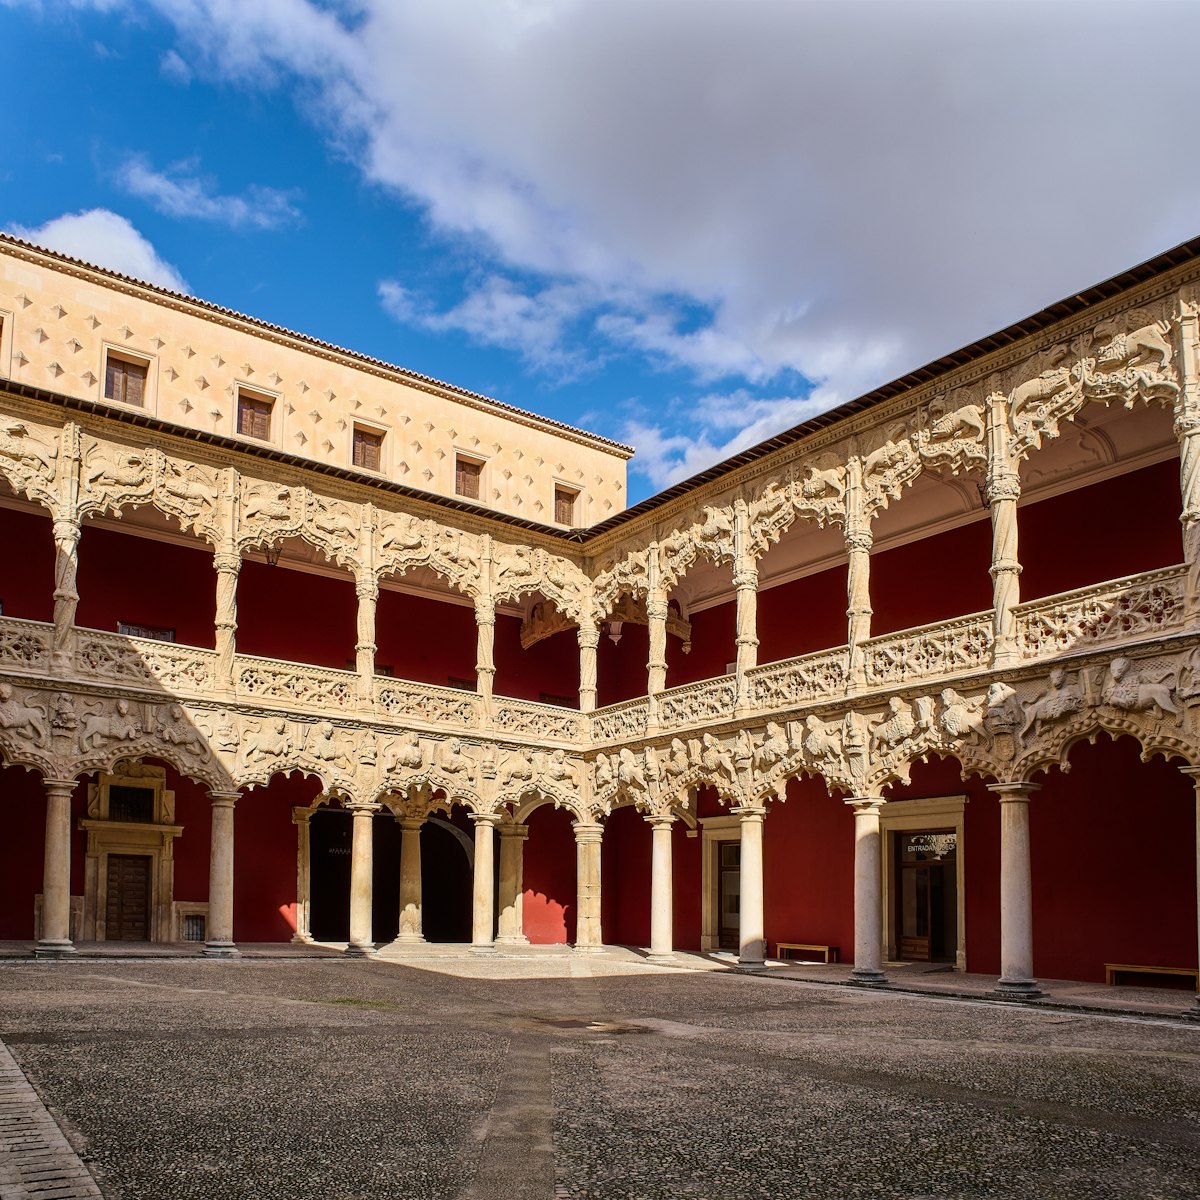 The Courtyard of the Lions in the Palace of El Infantado, Castilla la Mancha, Guadalajara, Spain.